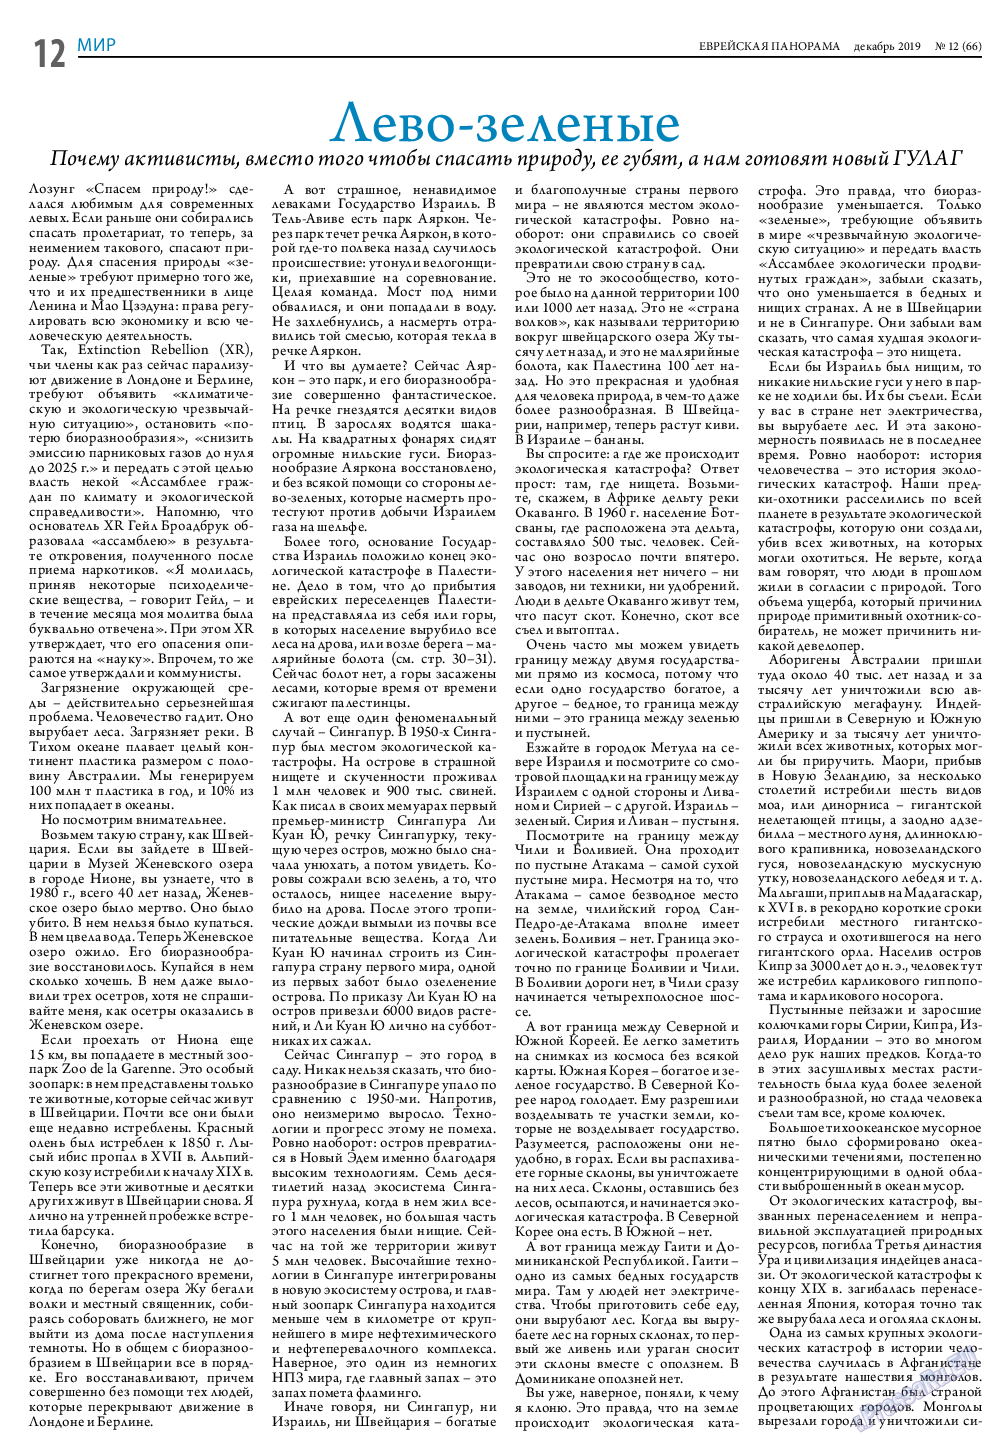 Еврейская панорама, газета. 2019 №12 стр.12